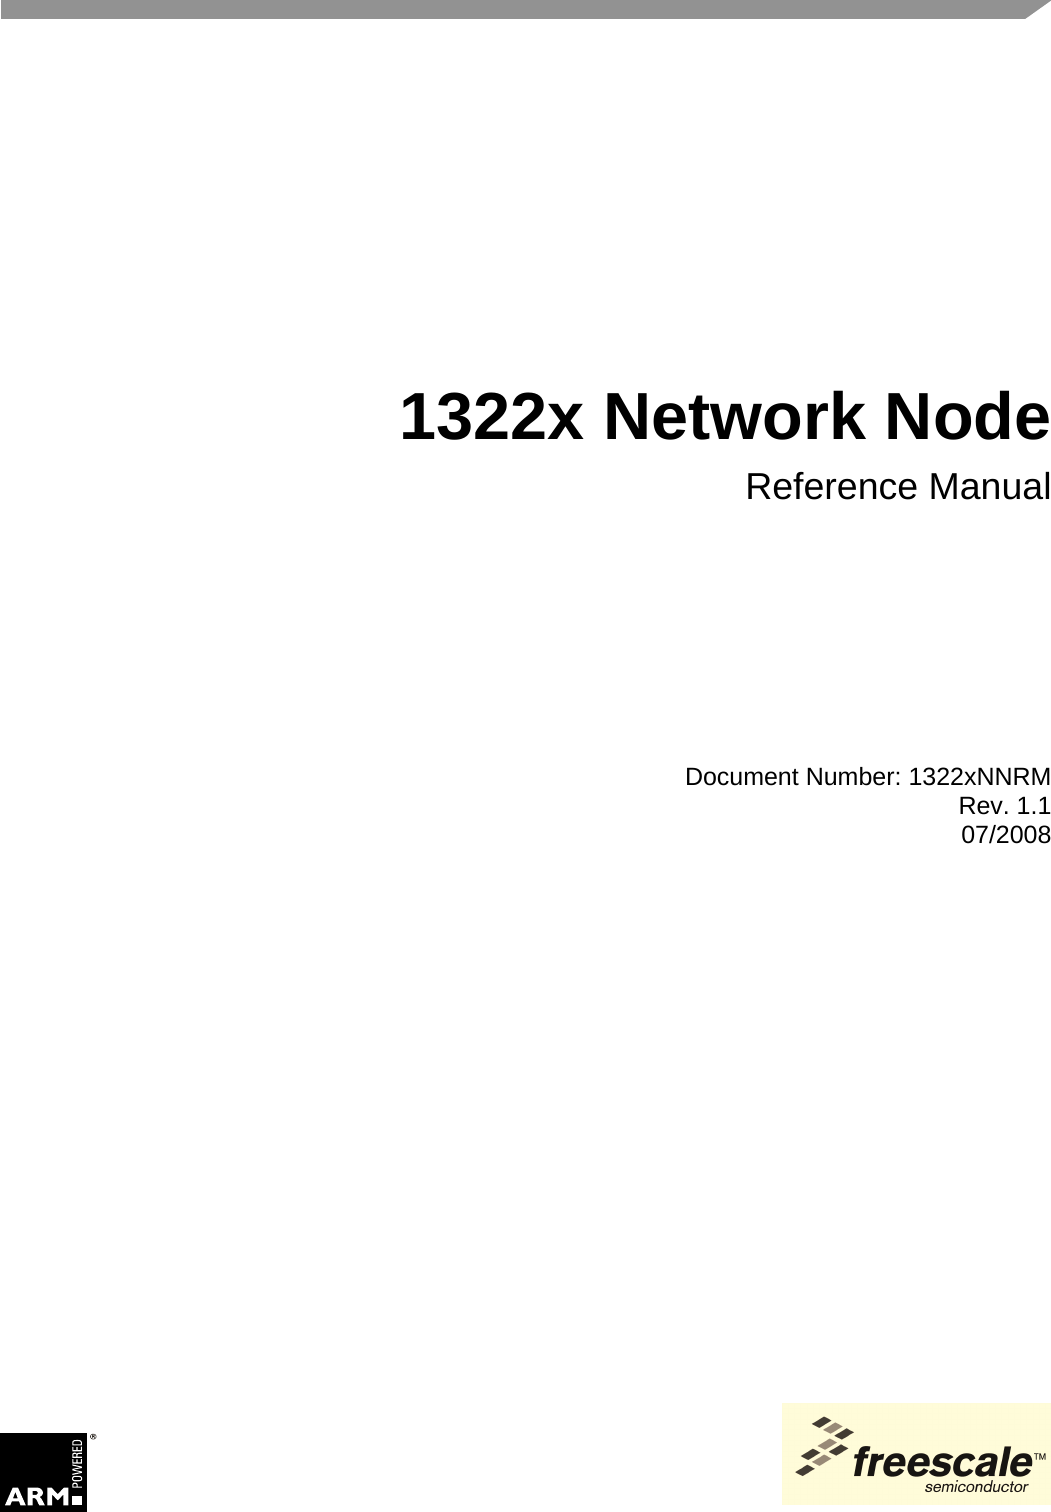 Document Number: 1322xNNRMRev. 1.107/2008 1322x Network NodeReference Manual